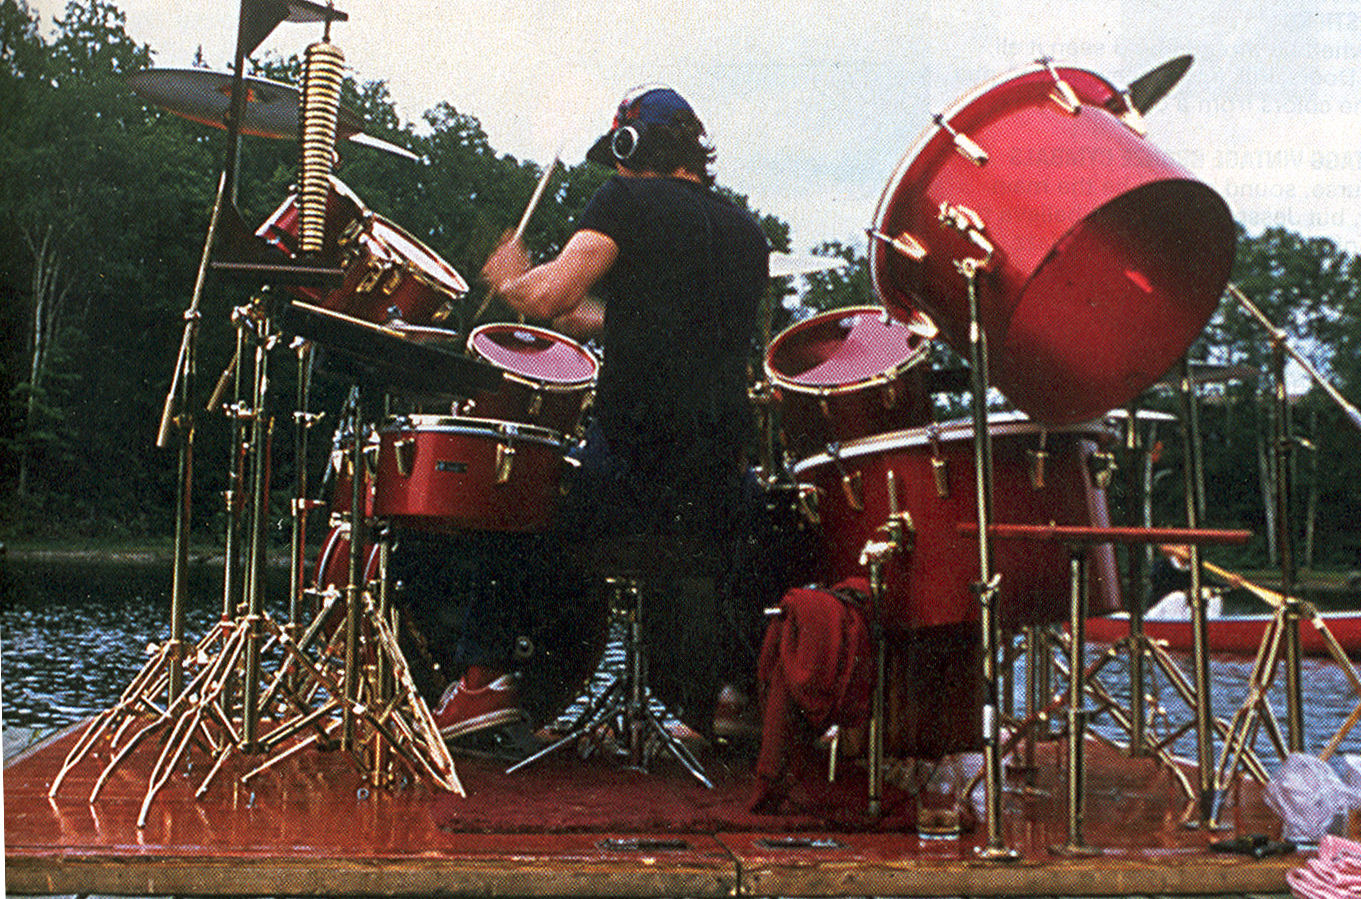 rush drummer drum kit